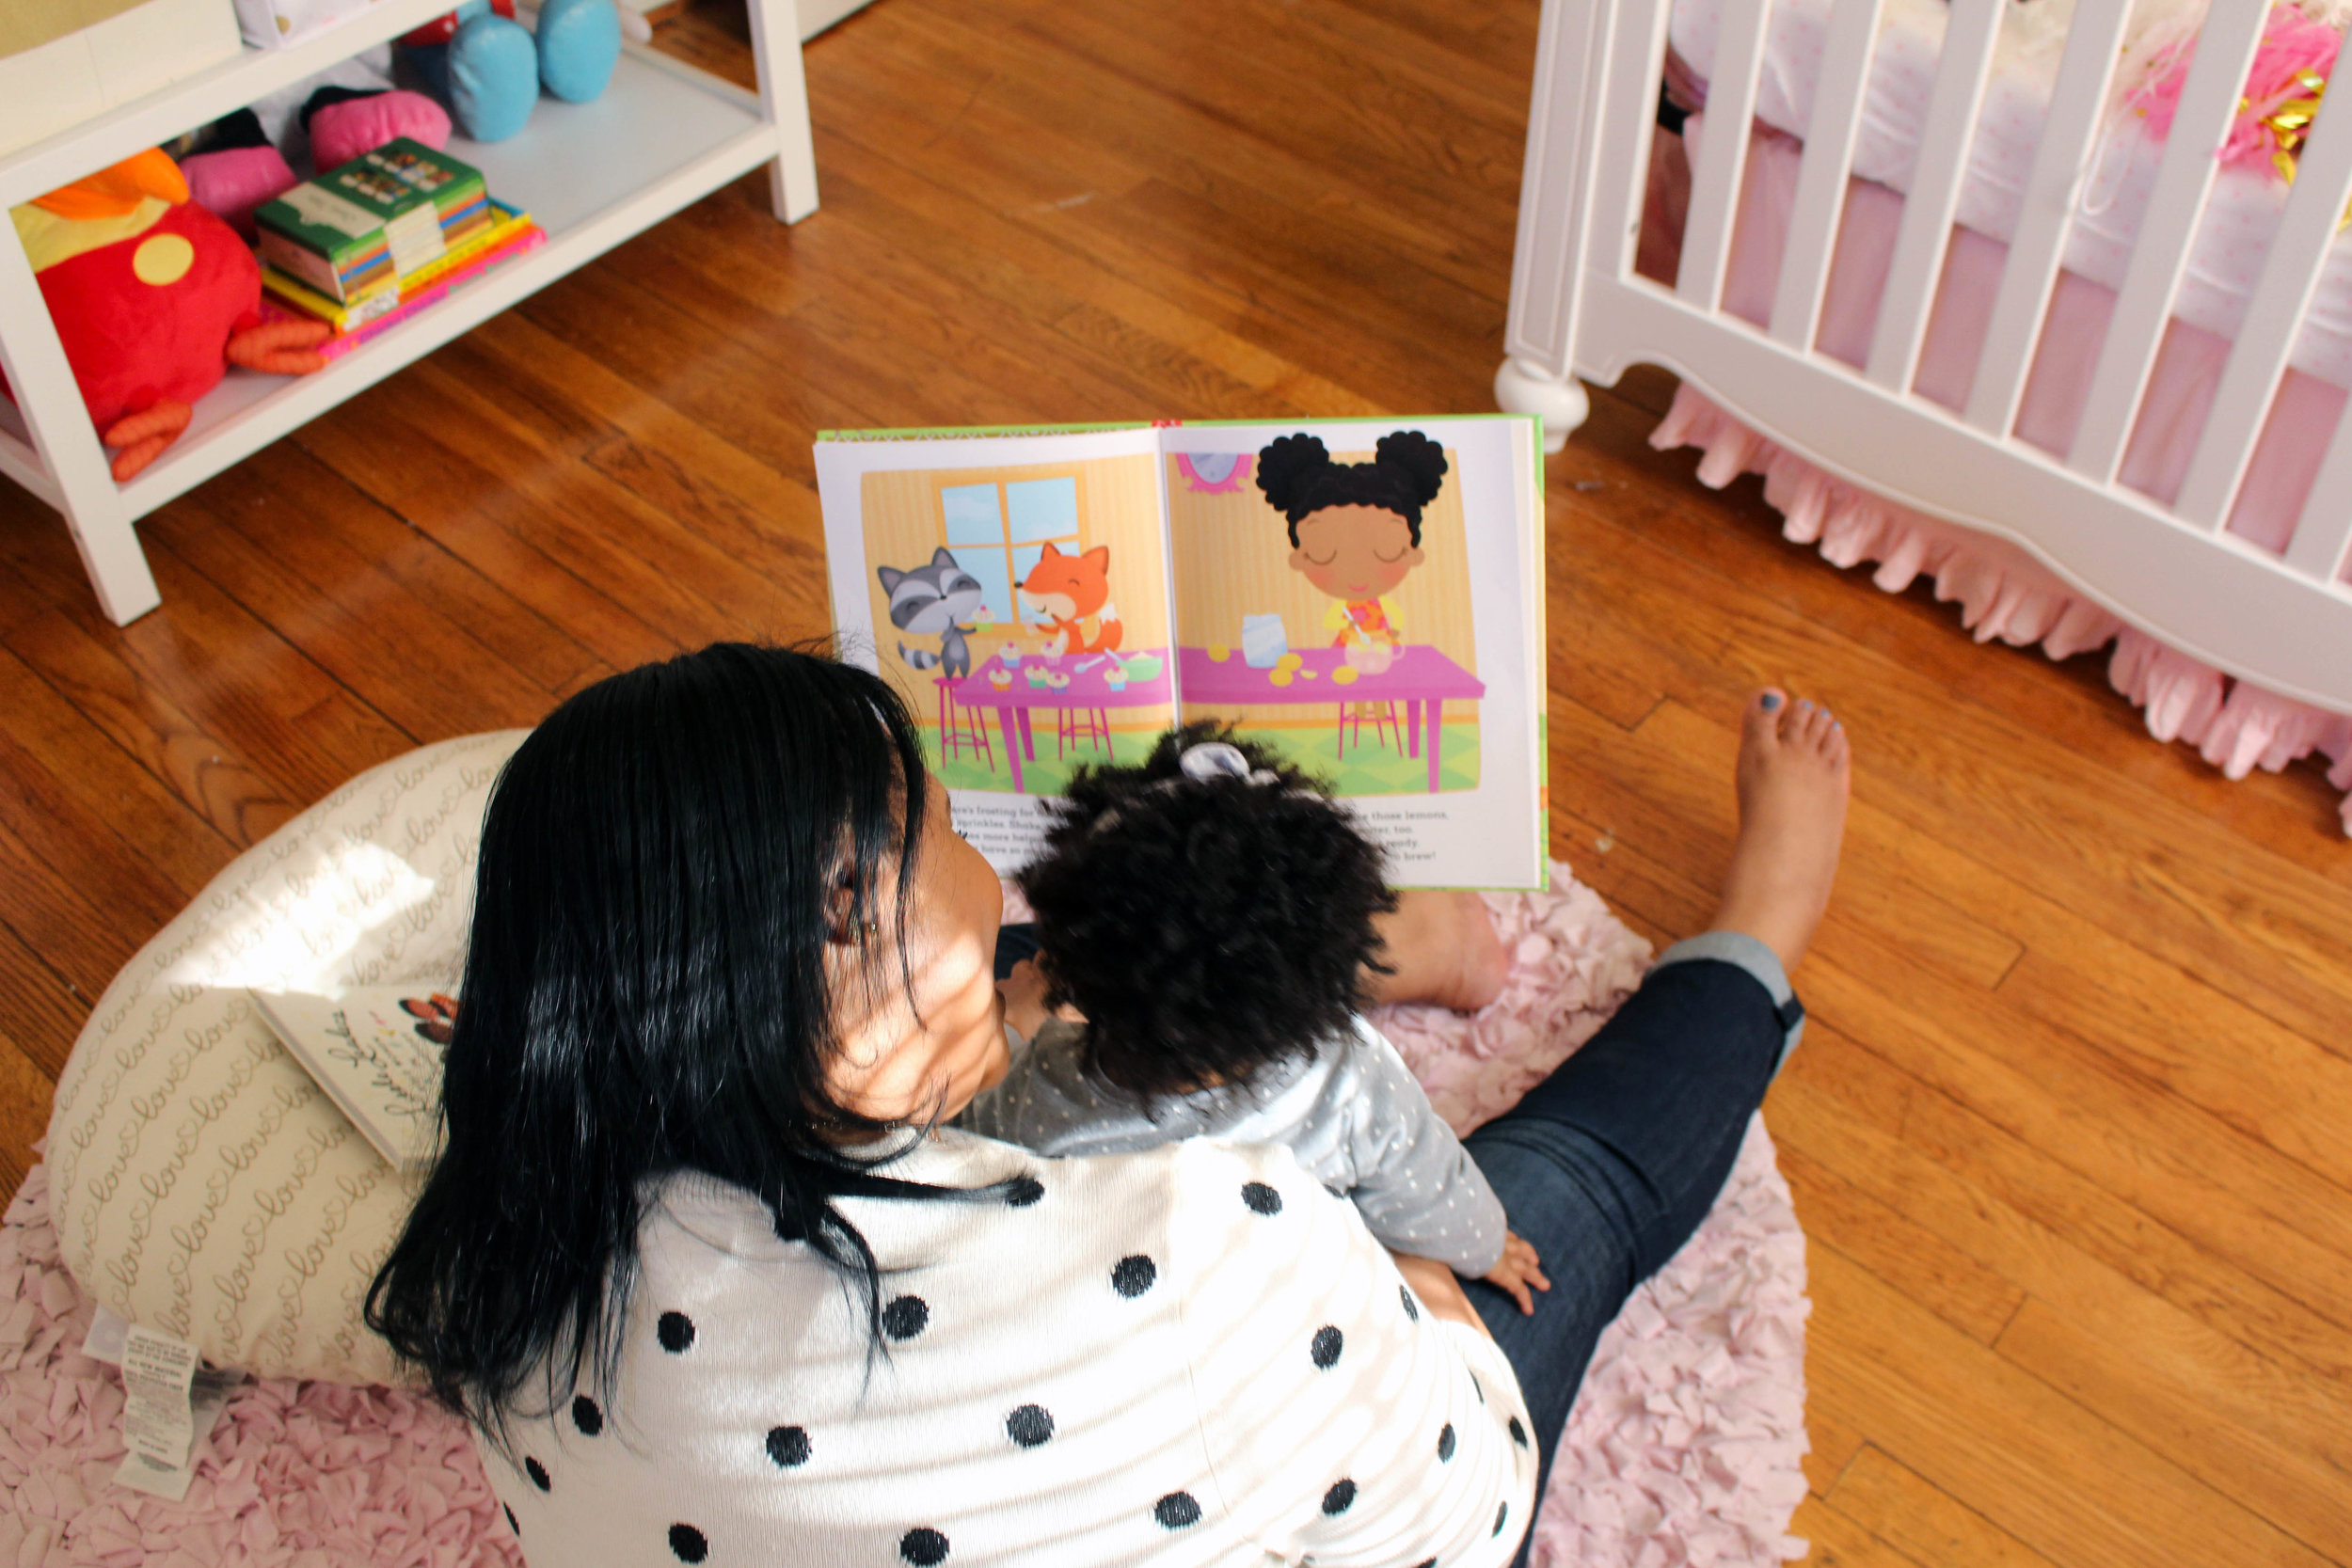  non-traditional baby gift ideas - personalized books | Pish Posh Perfect 